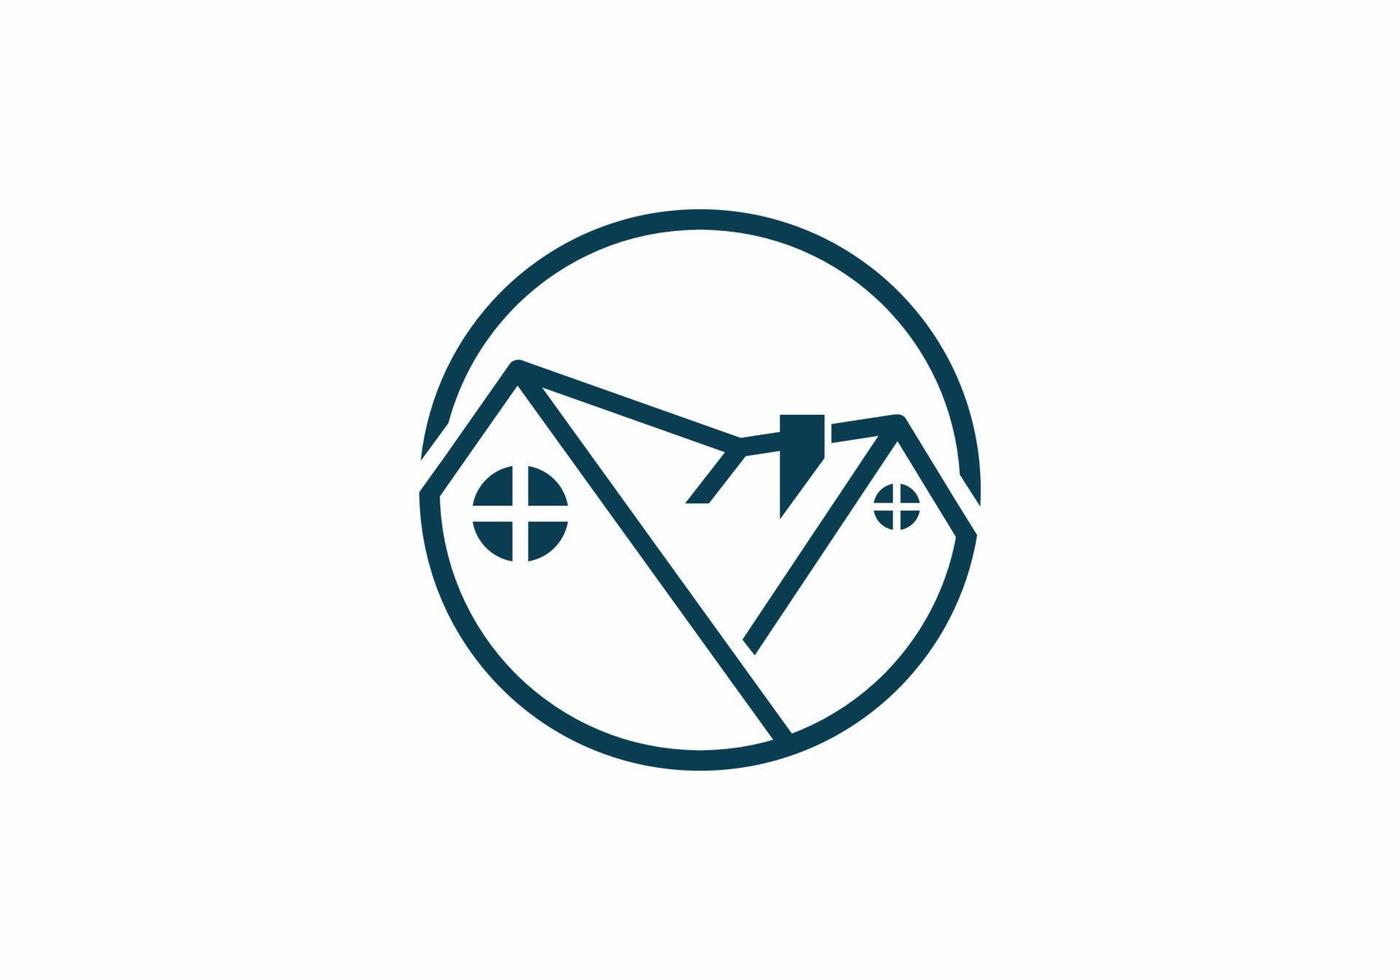 Line art house in circle logo vector